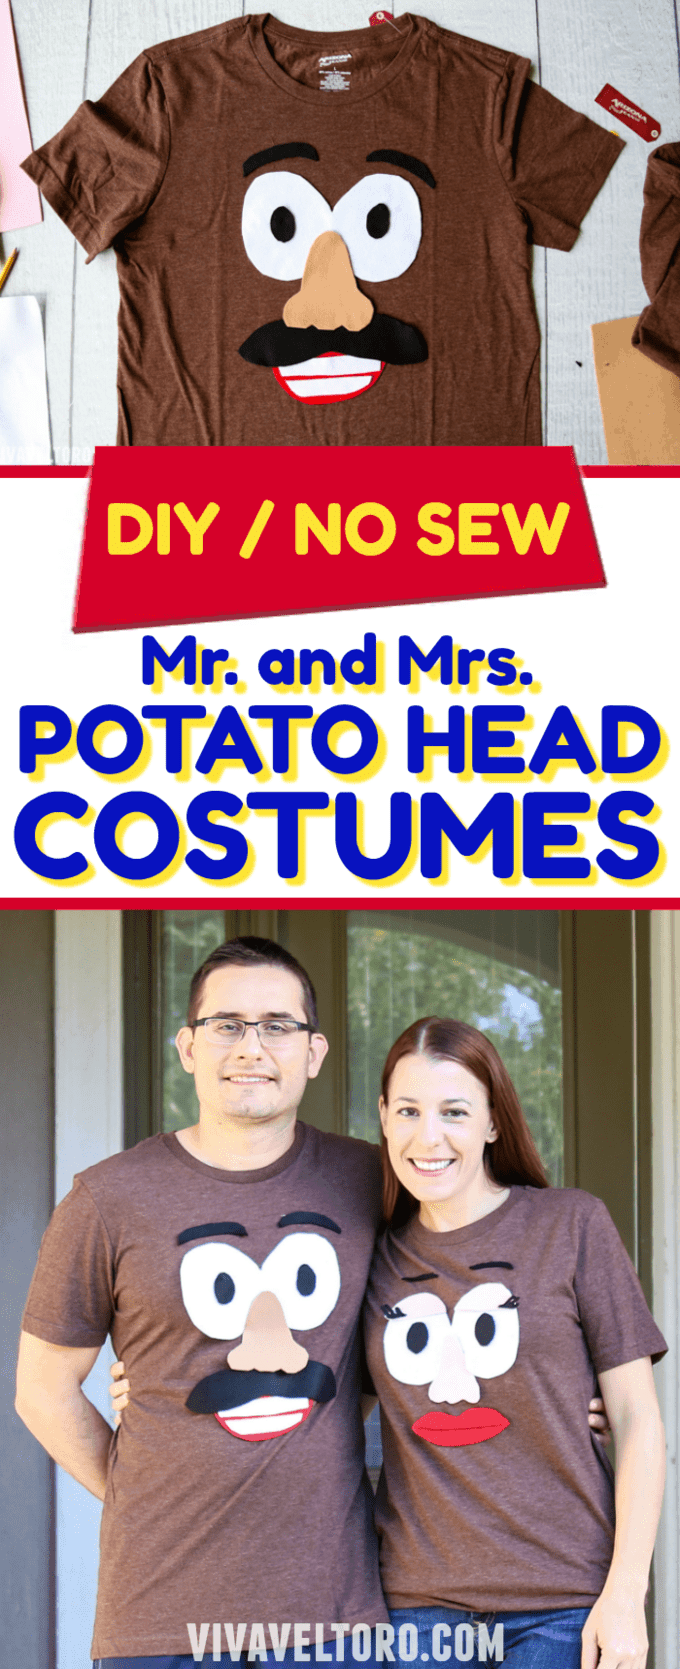 mr. and mrs. potato head costume